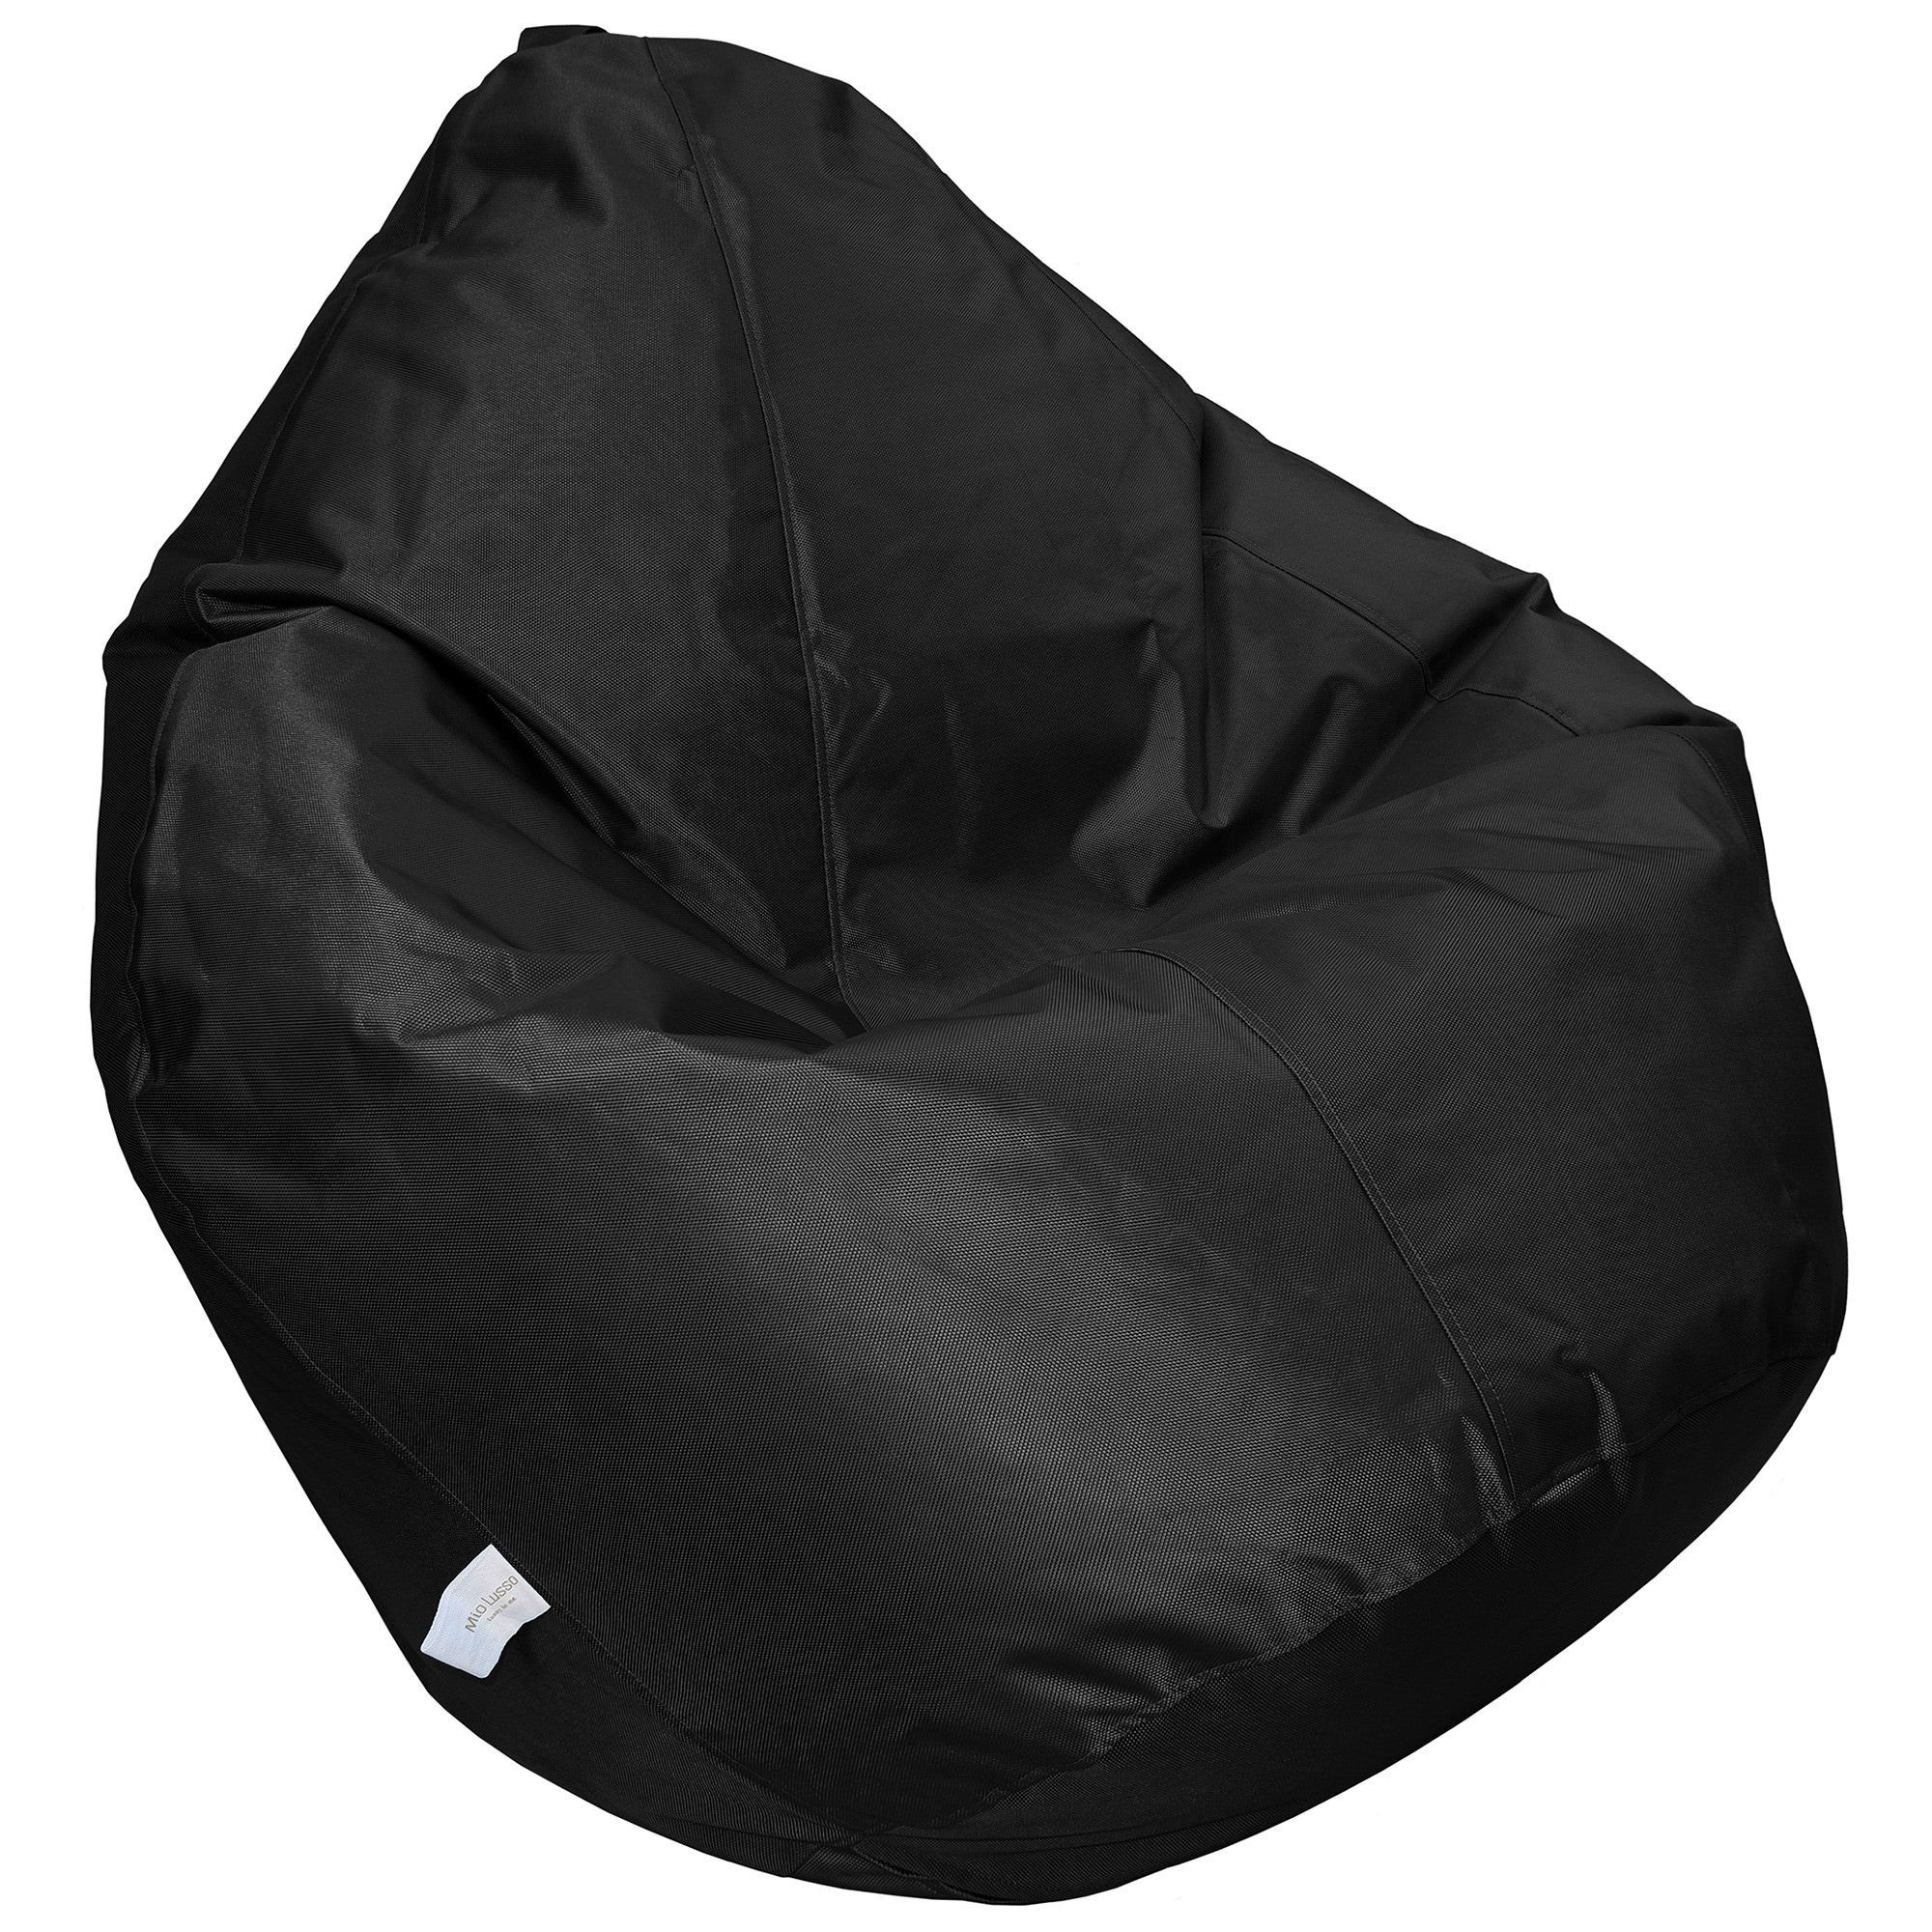 Cayman Fabric Indoor / Outdoor Bean Bag Cover, Black